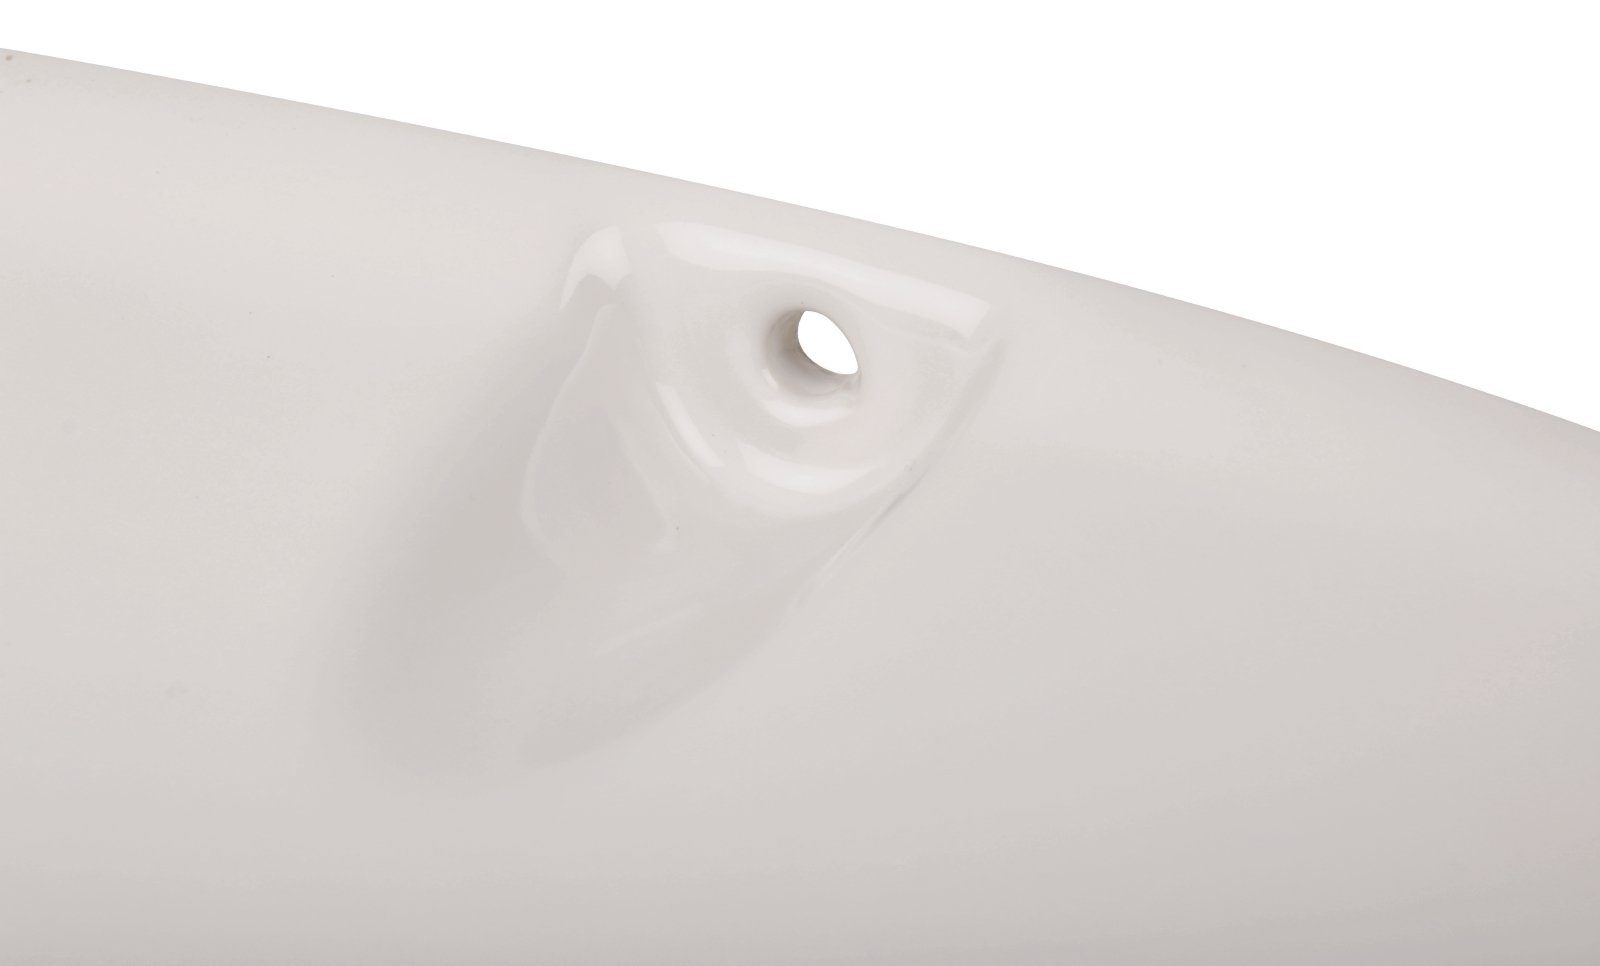 Weiß, cm, aquaSu 1-tlg., Spiegelablage Badregal, Überlaufschutz, 021401 Bohrmontage, Sanitär-Keramik, 60